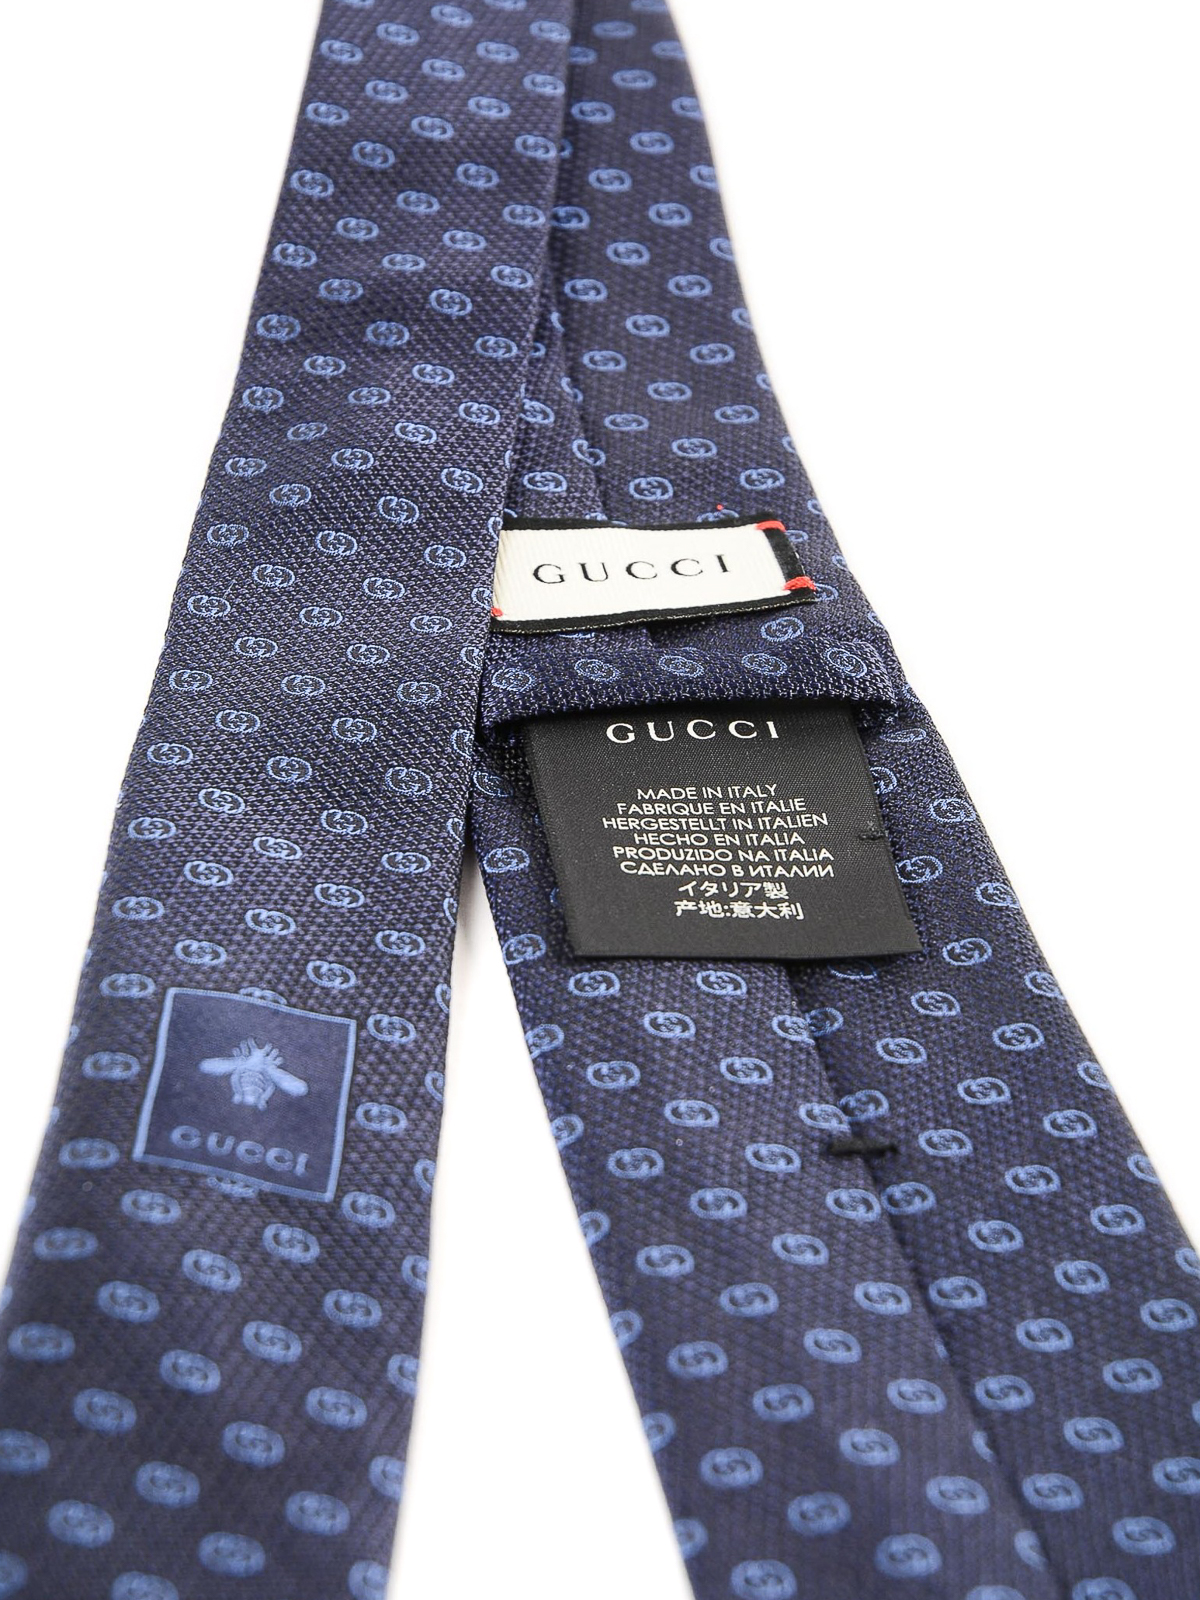 gucci ties on sale